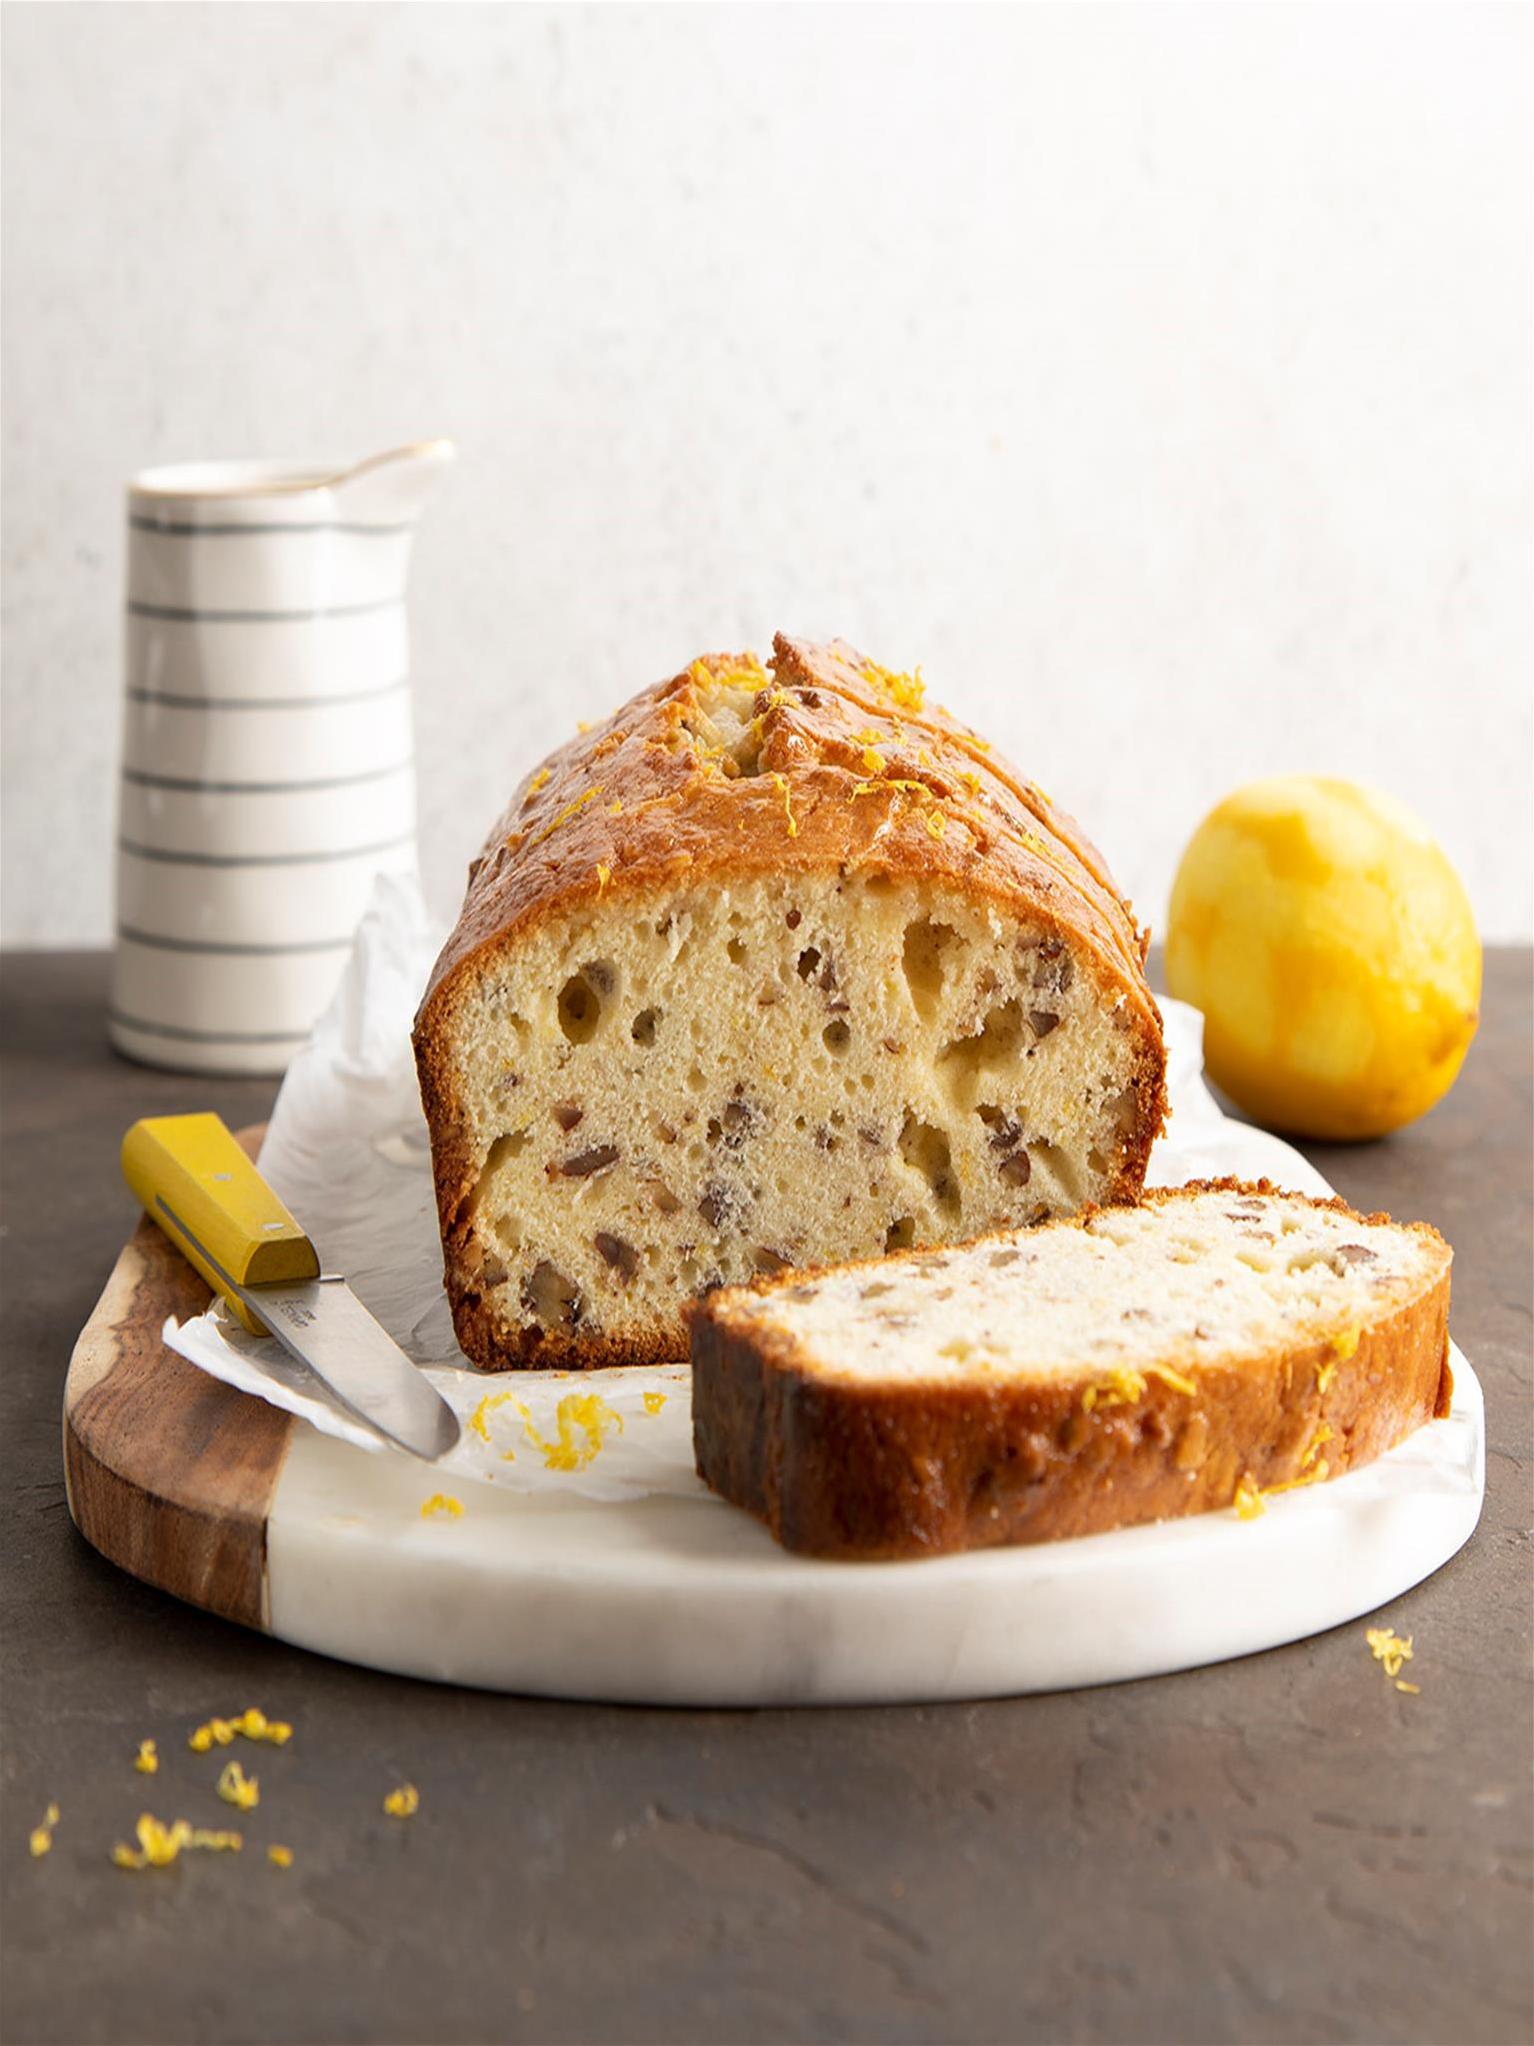 Delicious Lemon Pecan Pound Cake Recipe – Try it Now!